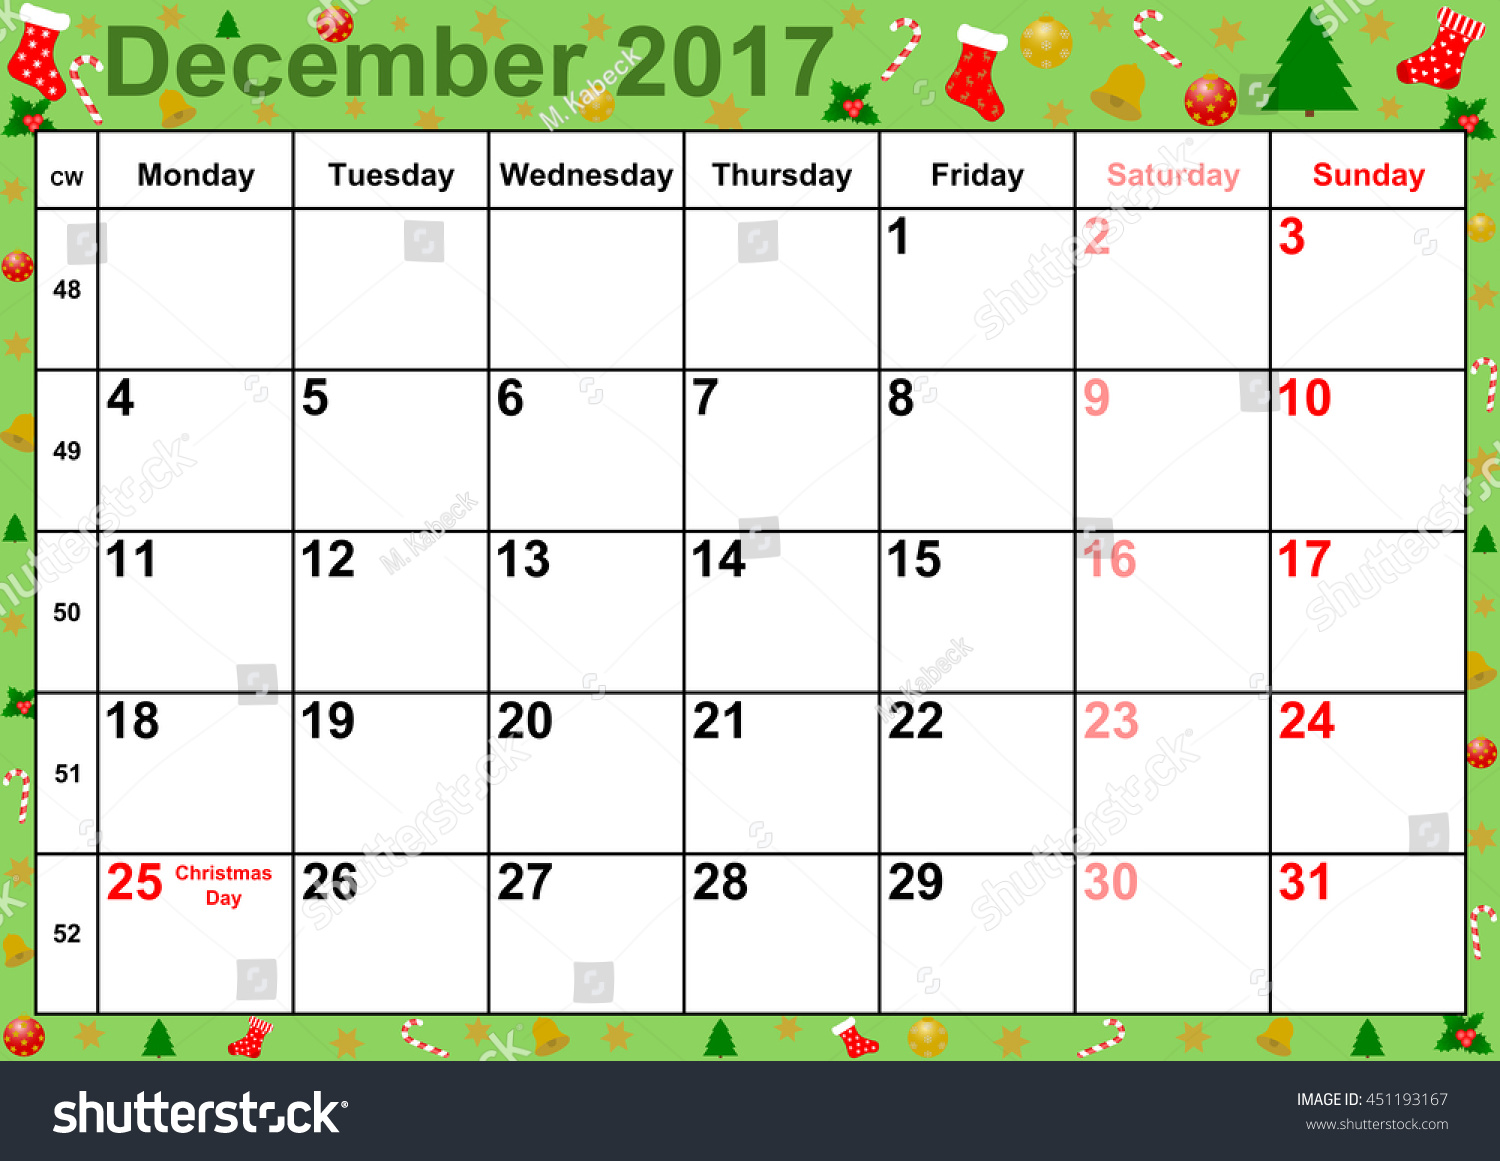 Calendar 2017 Months December Holidays Us Stock Illustration 451193167